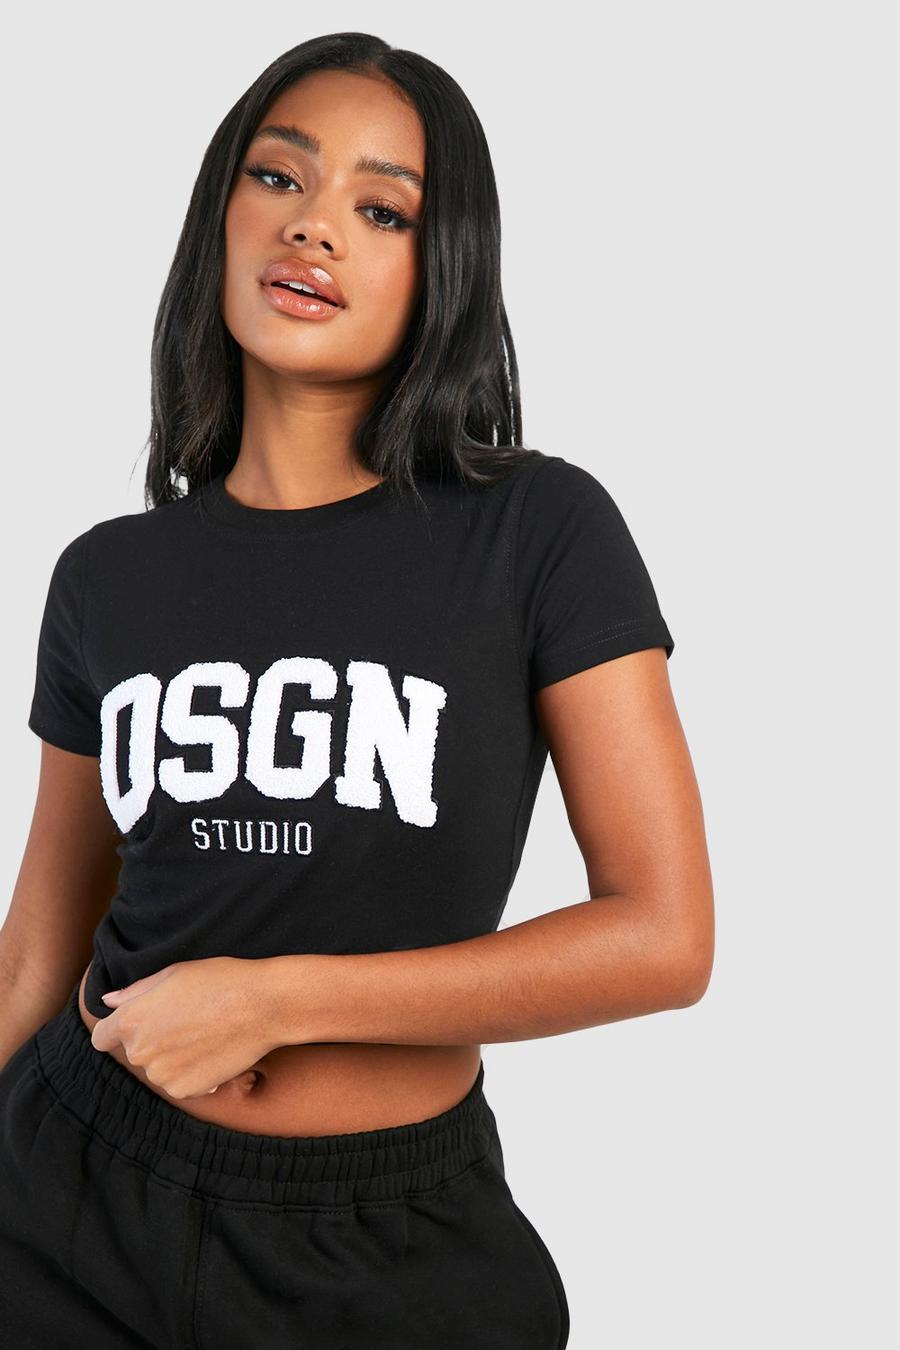 Black Dsgn Studio Toweling Applique Fitted T-Shirt